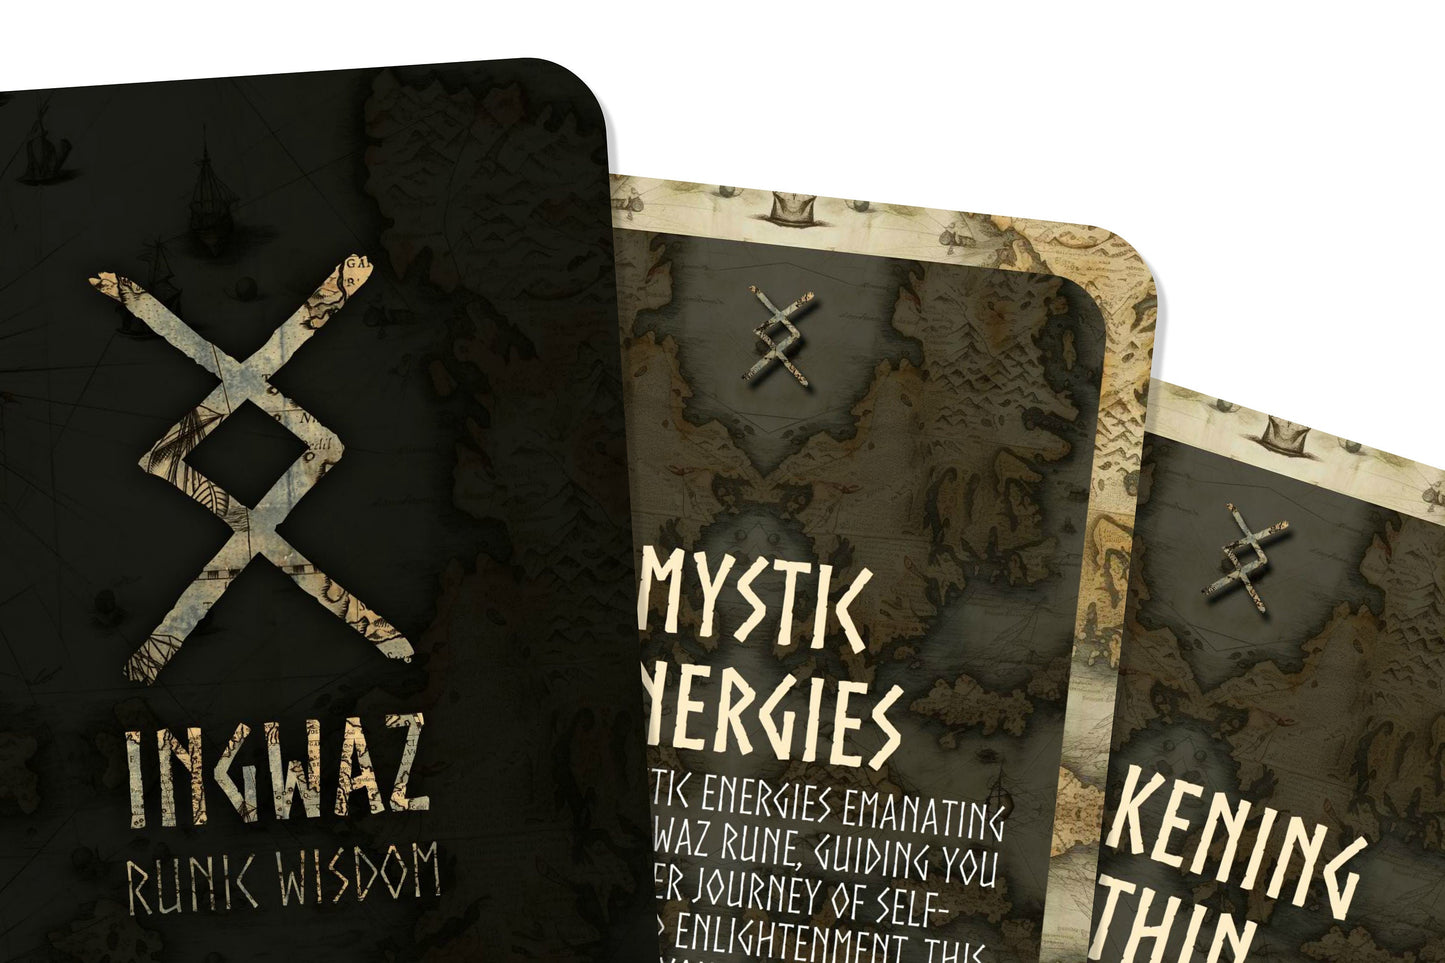 Ingwaz Runic Wisdom - Celestial Runes Series - Divination tools - Oracle Cards - Runes Cards